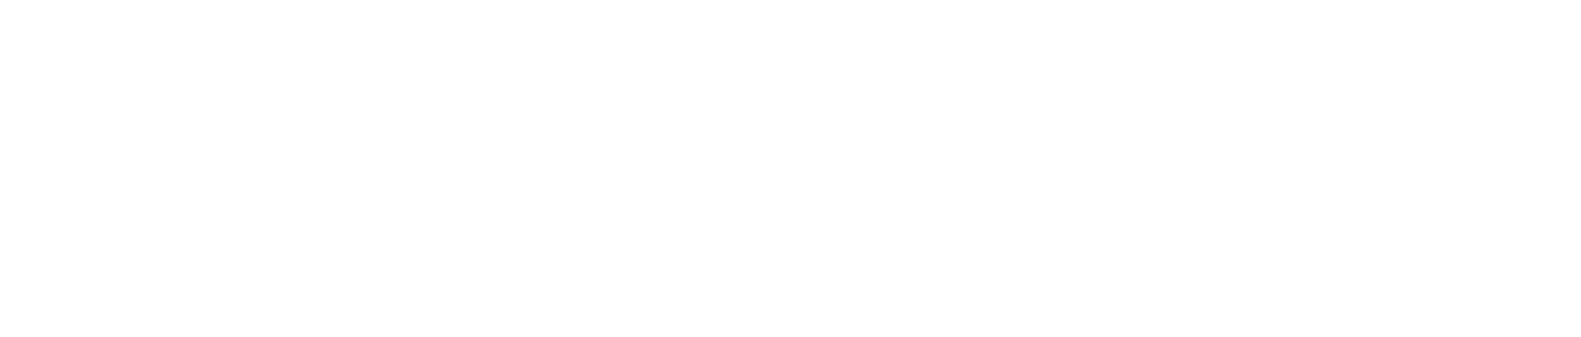 Pagaya Technologies Logo groß für dunkle Hintergründe (transparentes PNG)